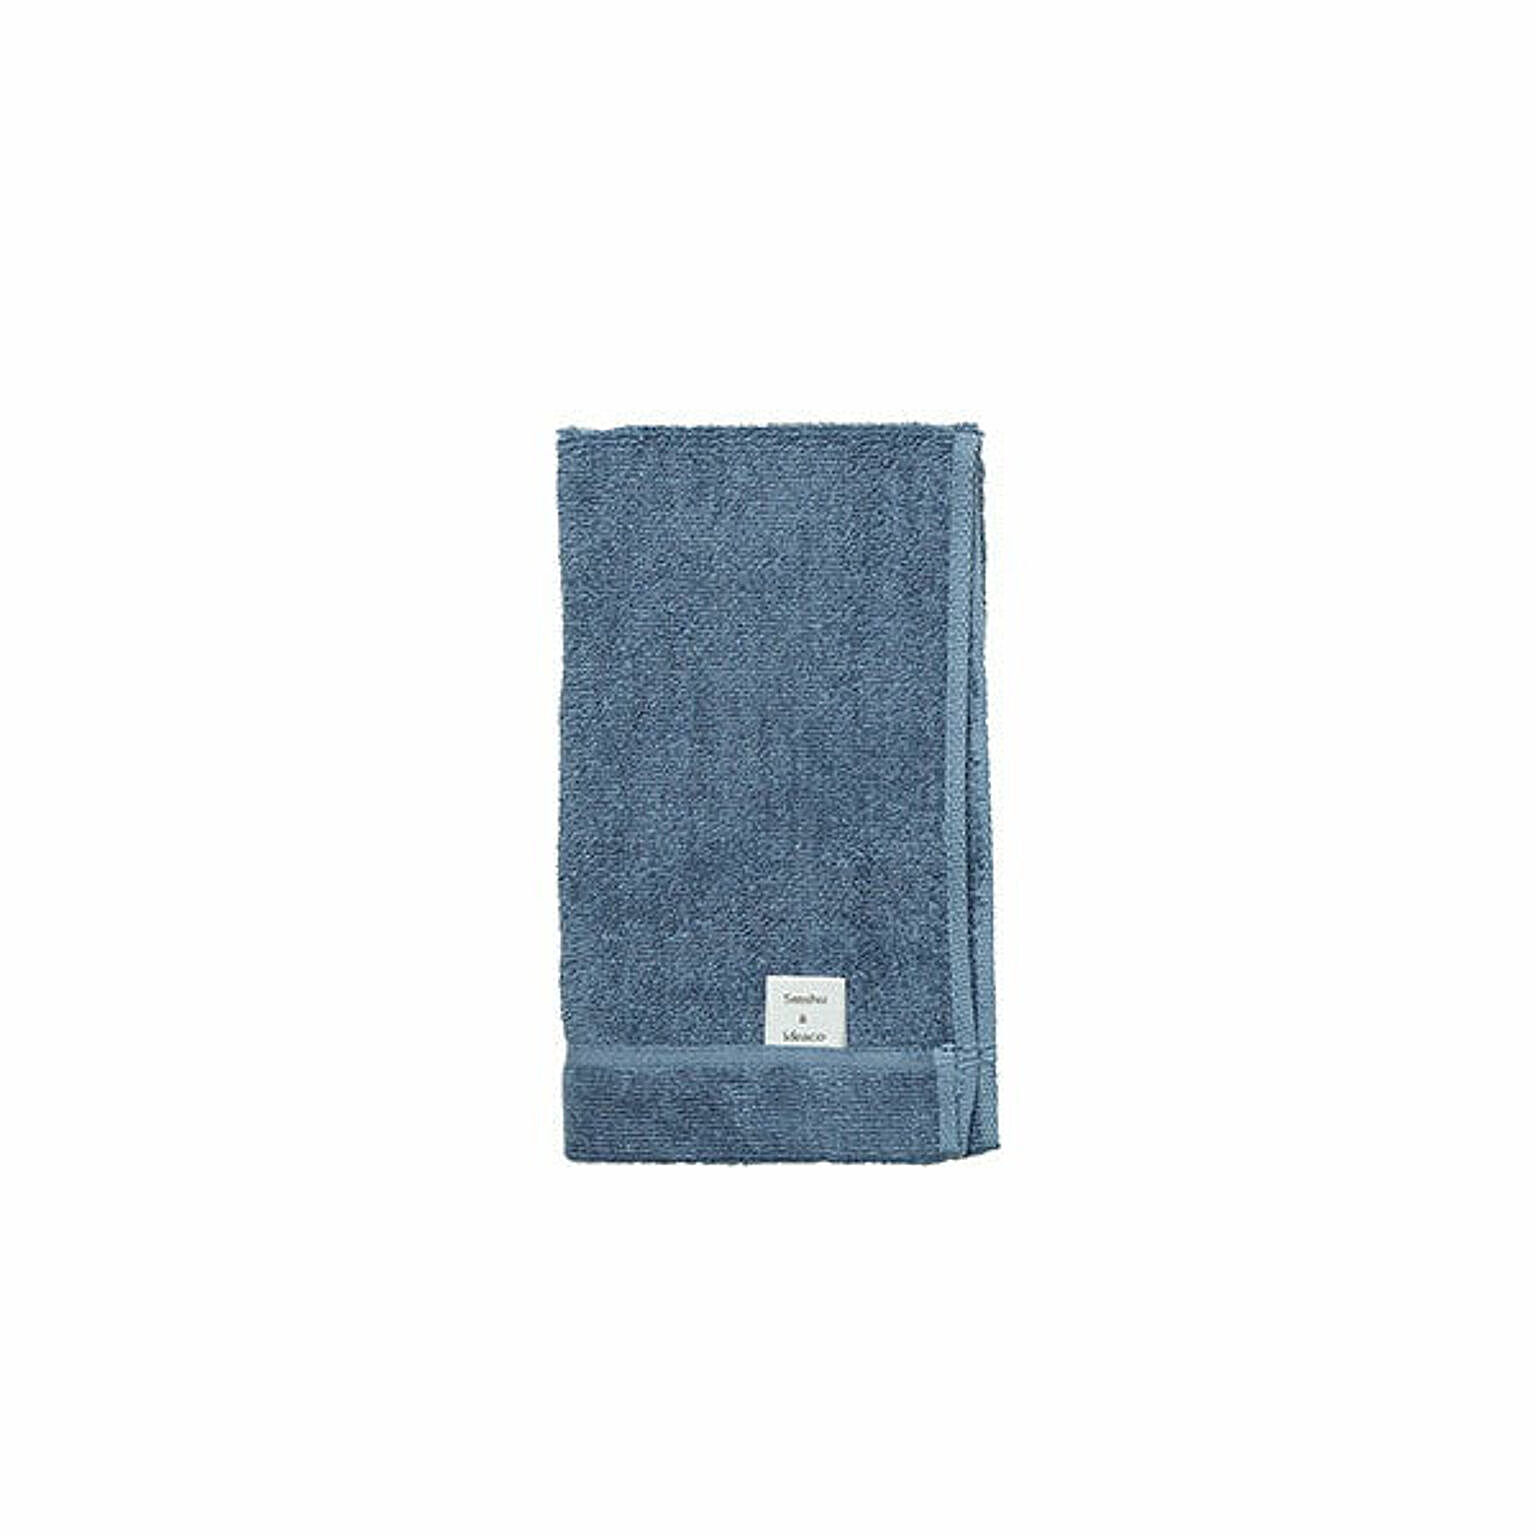 organic cotton towel / mini face イデアコ オーガニック コットン タオル / ミニフェイス 泉州タオル